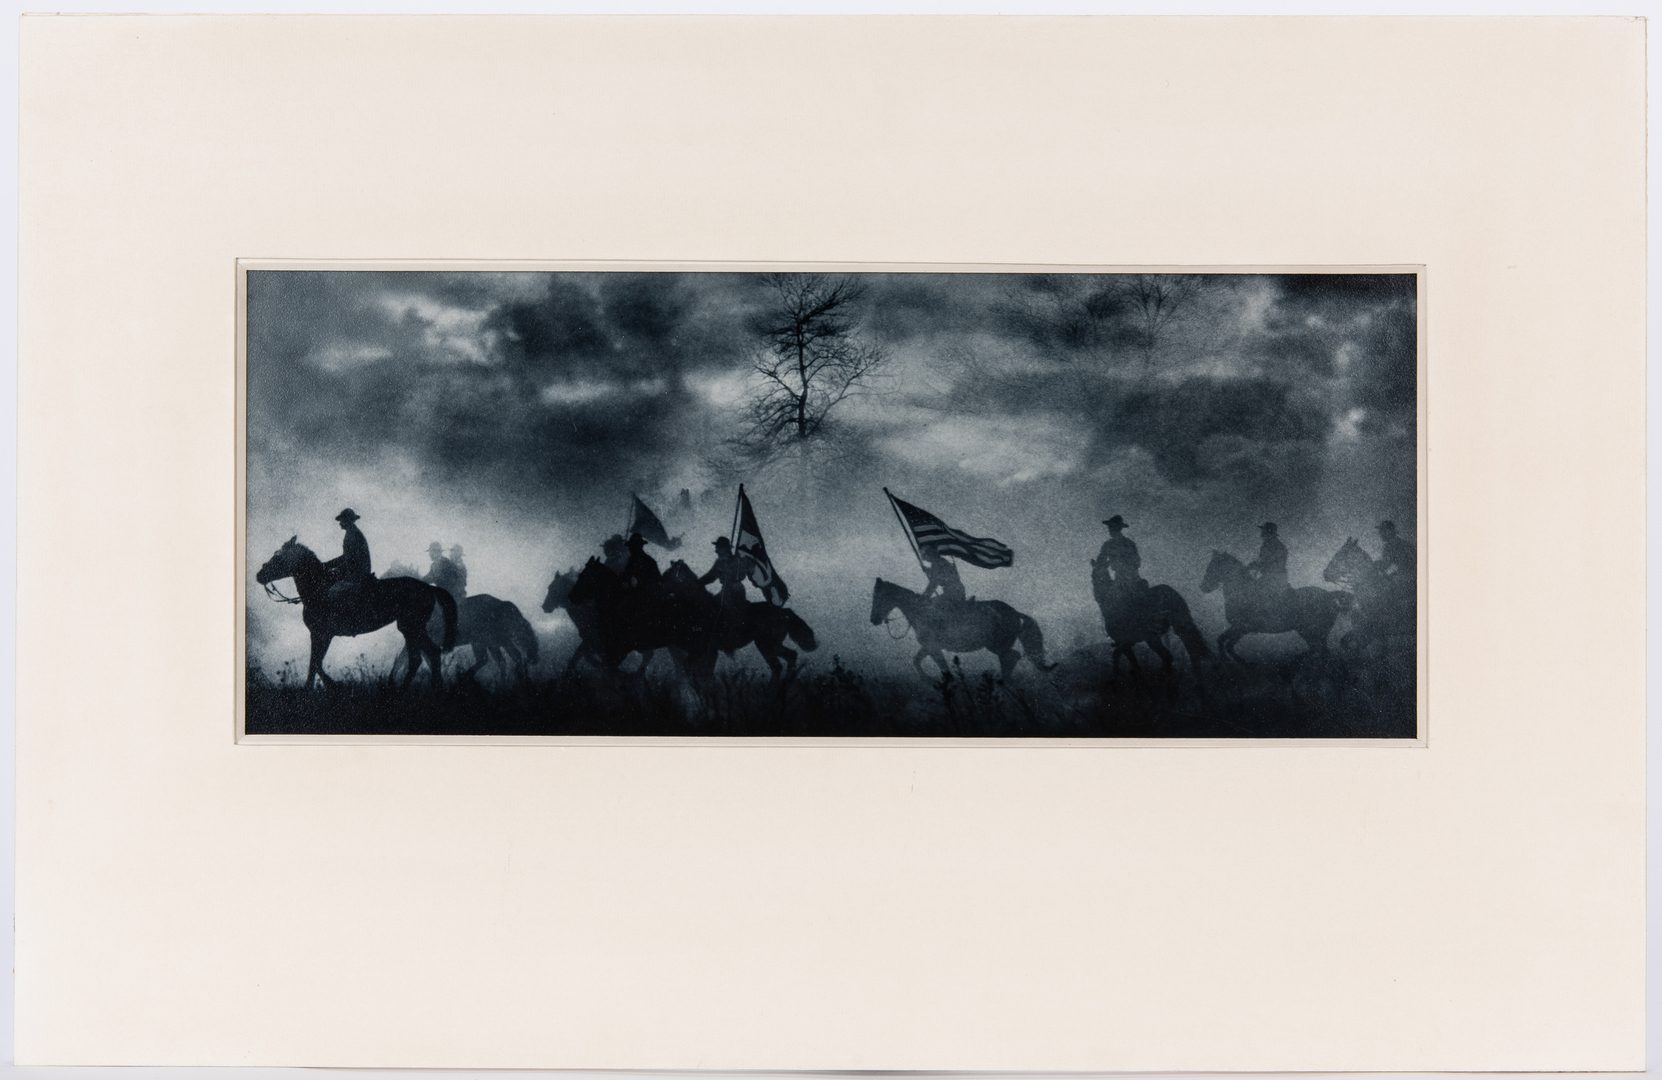 Lot 396: A. Aubrey Bodine Photograph, "Smoke Screen"